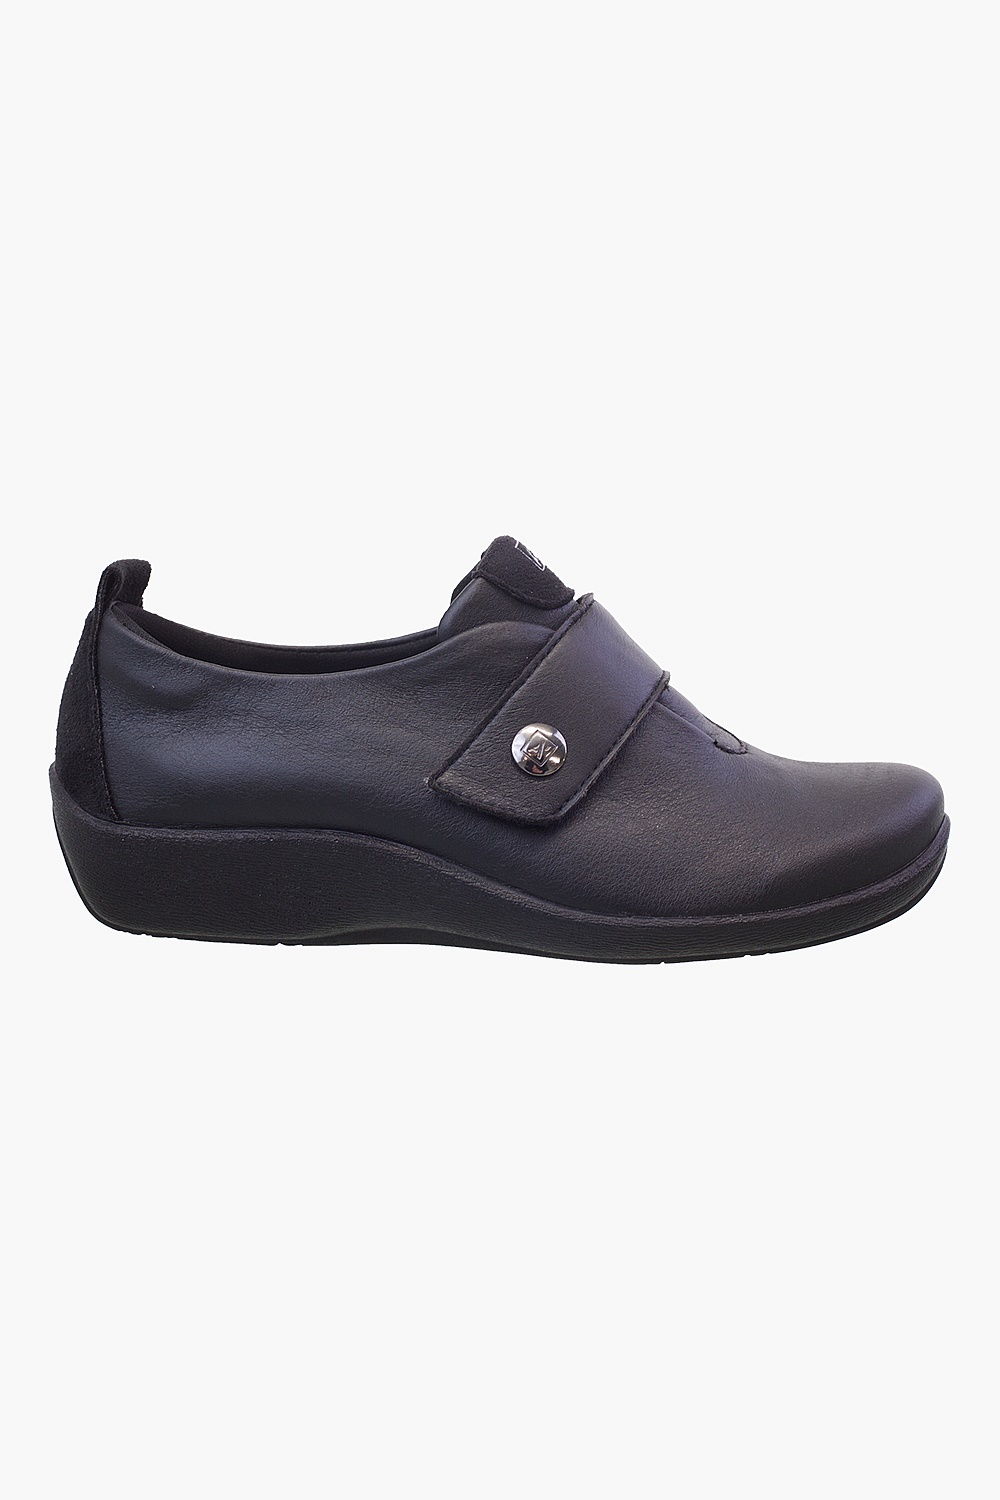 Arcopedico Shoes on Sale - Lesley